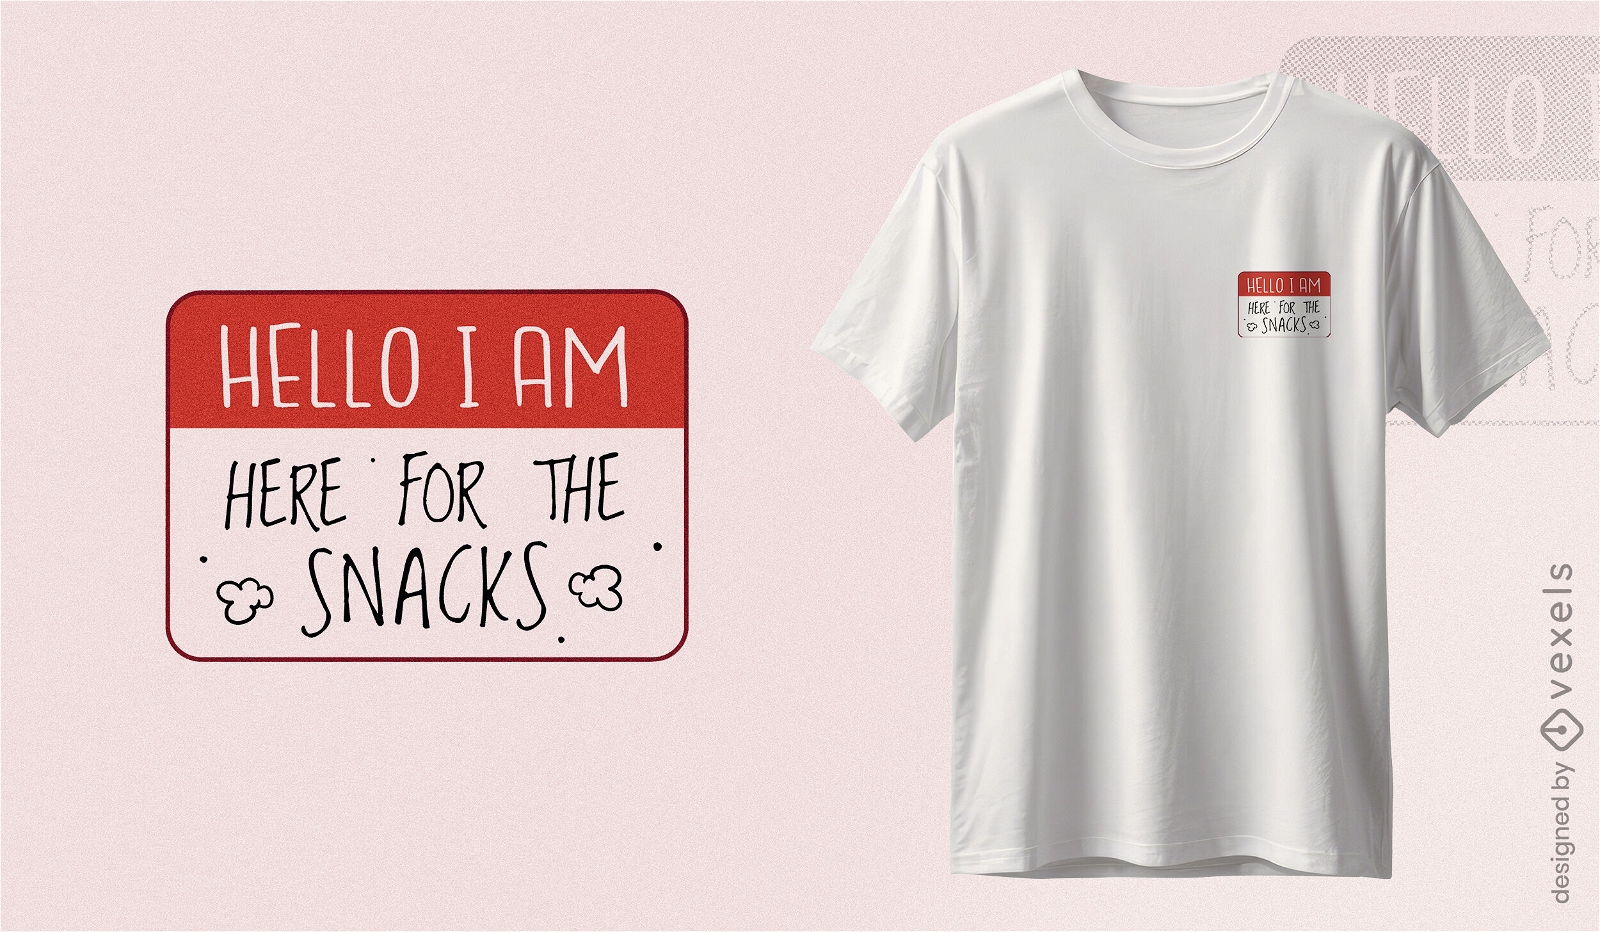 Snacks lover name tag t-shirt design